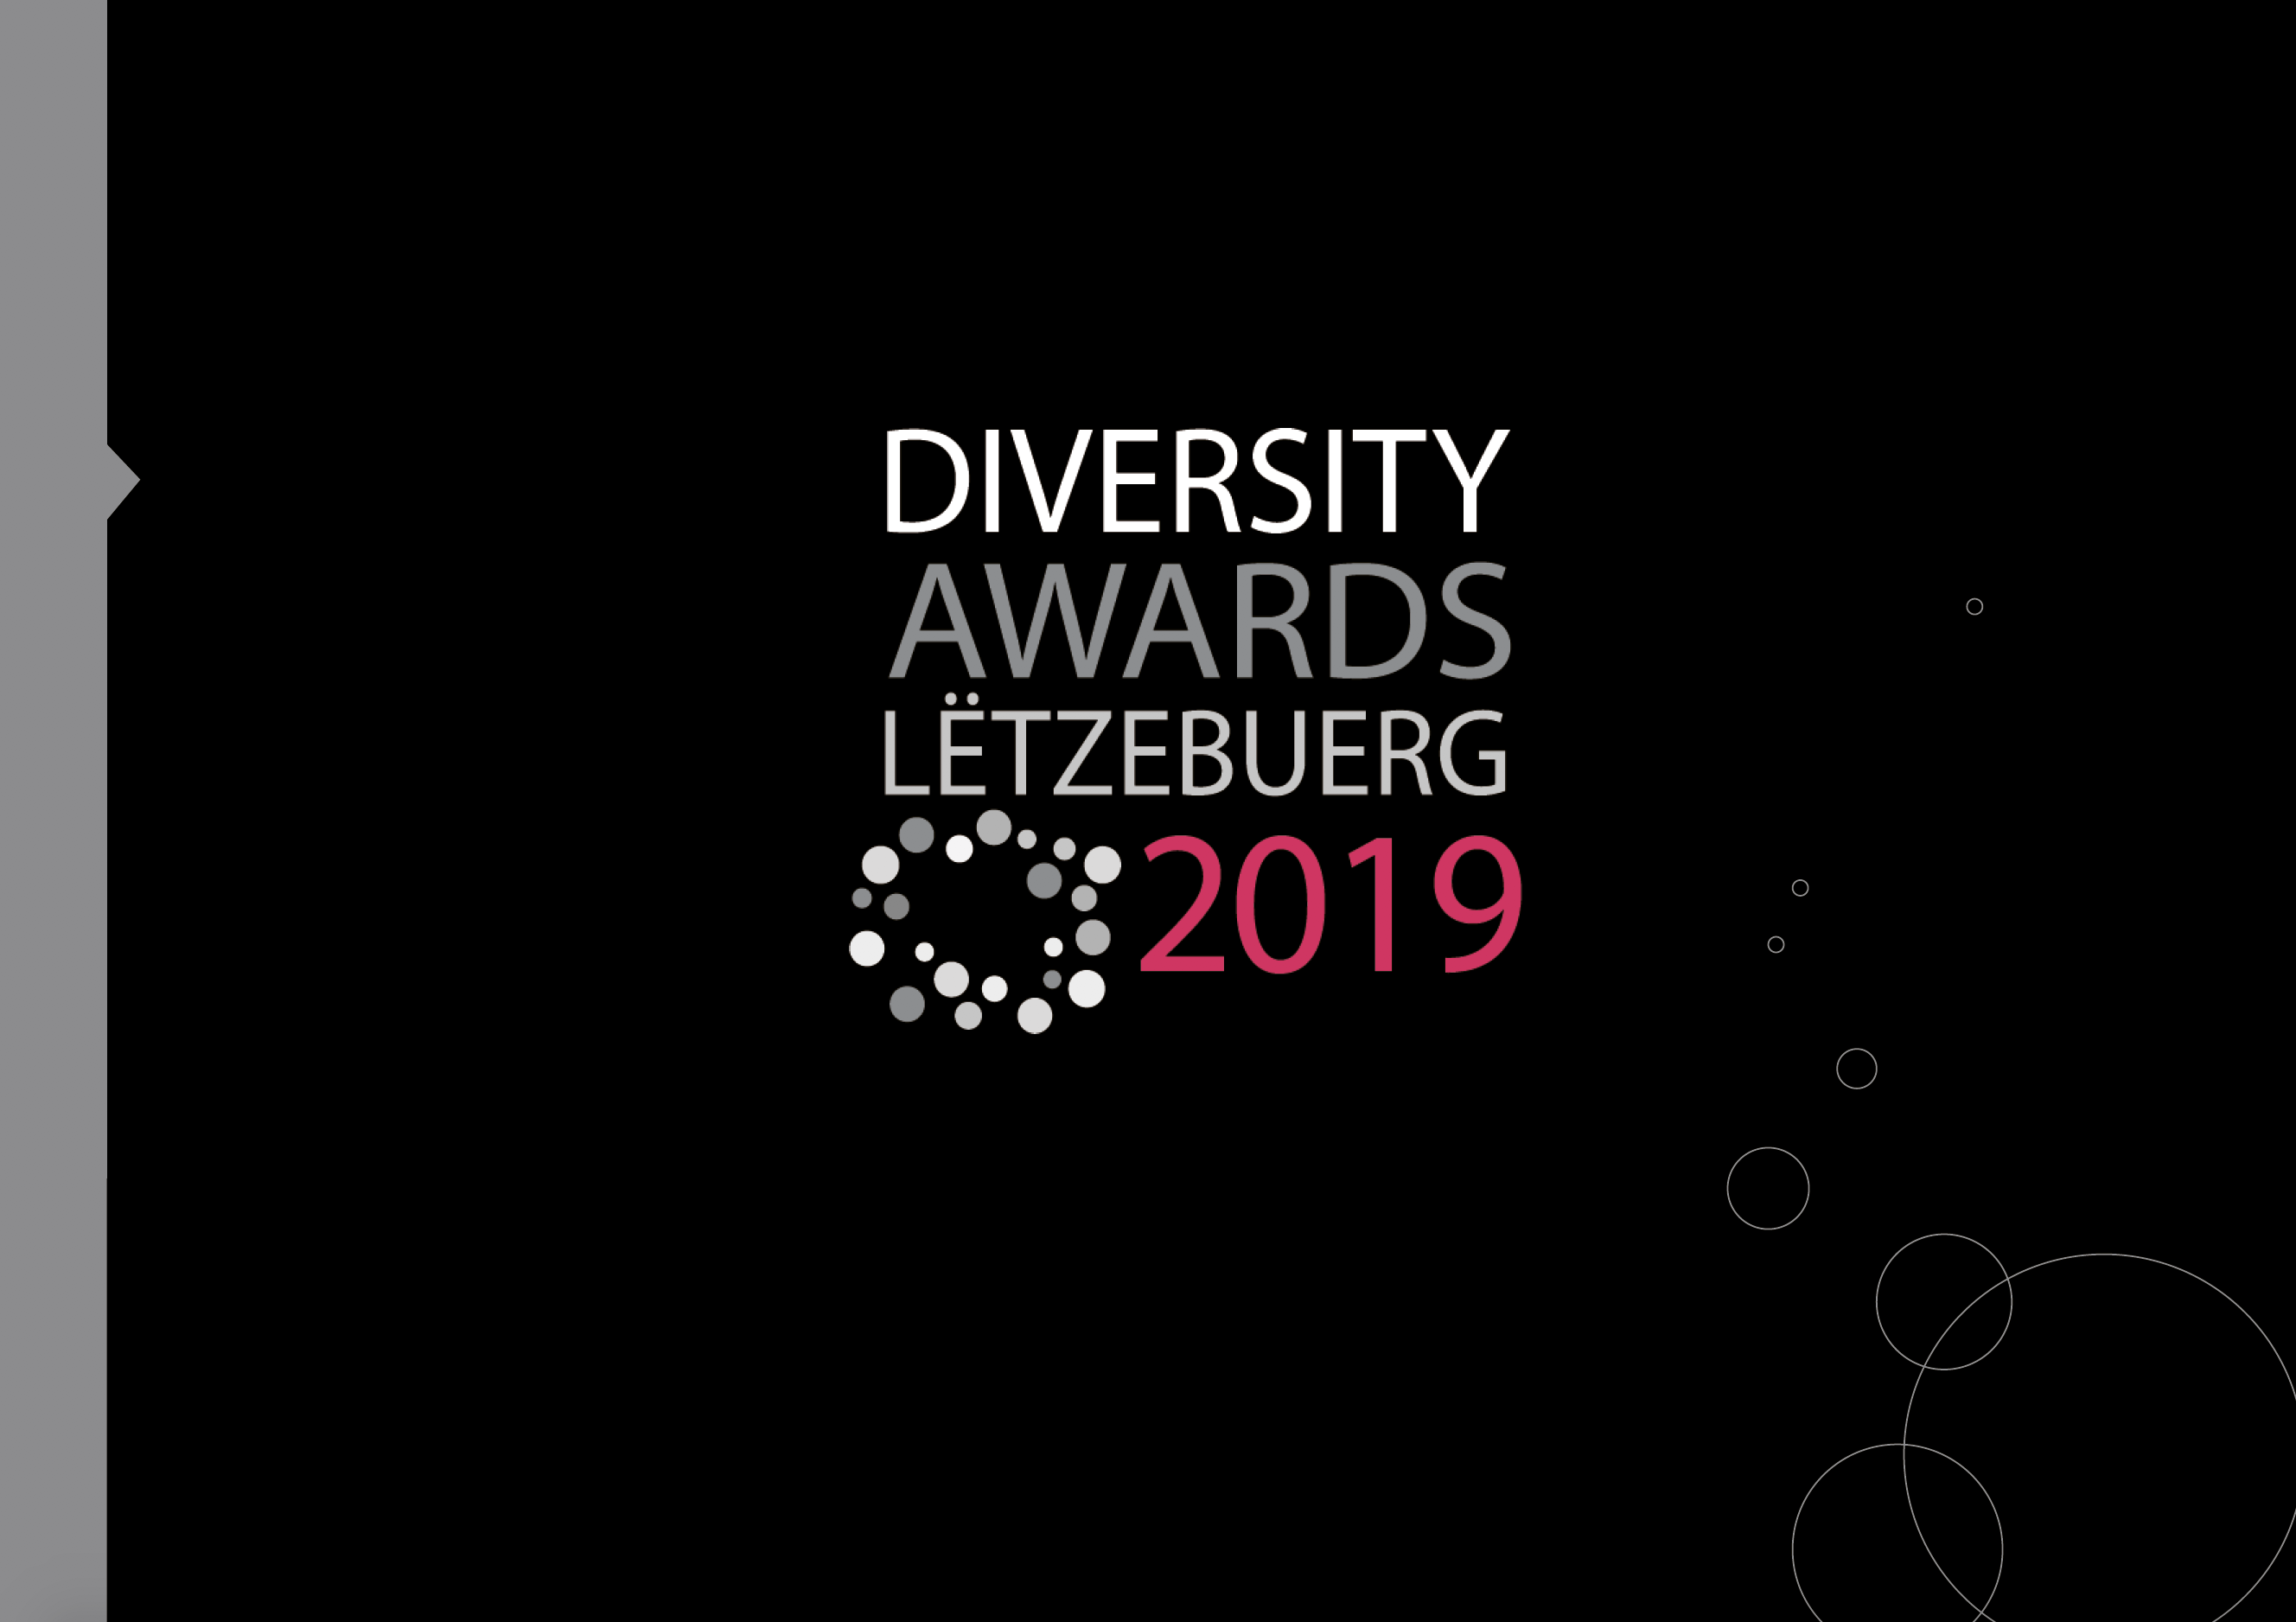 Diversity Awards Lëtzebuerg 2019 brochure